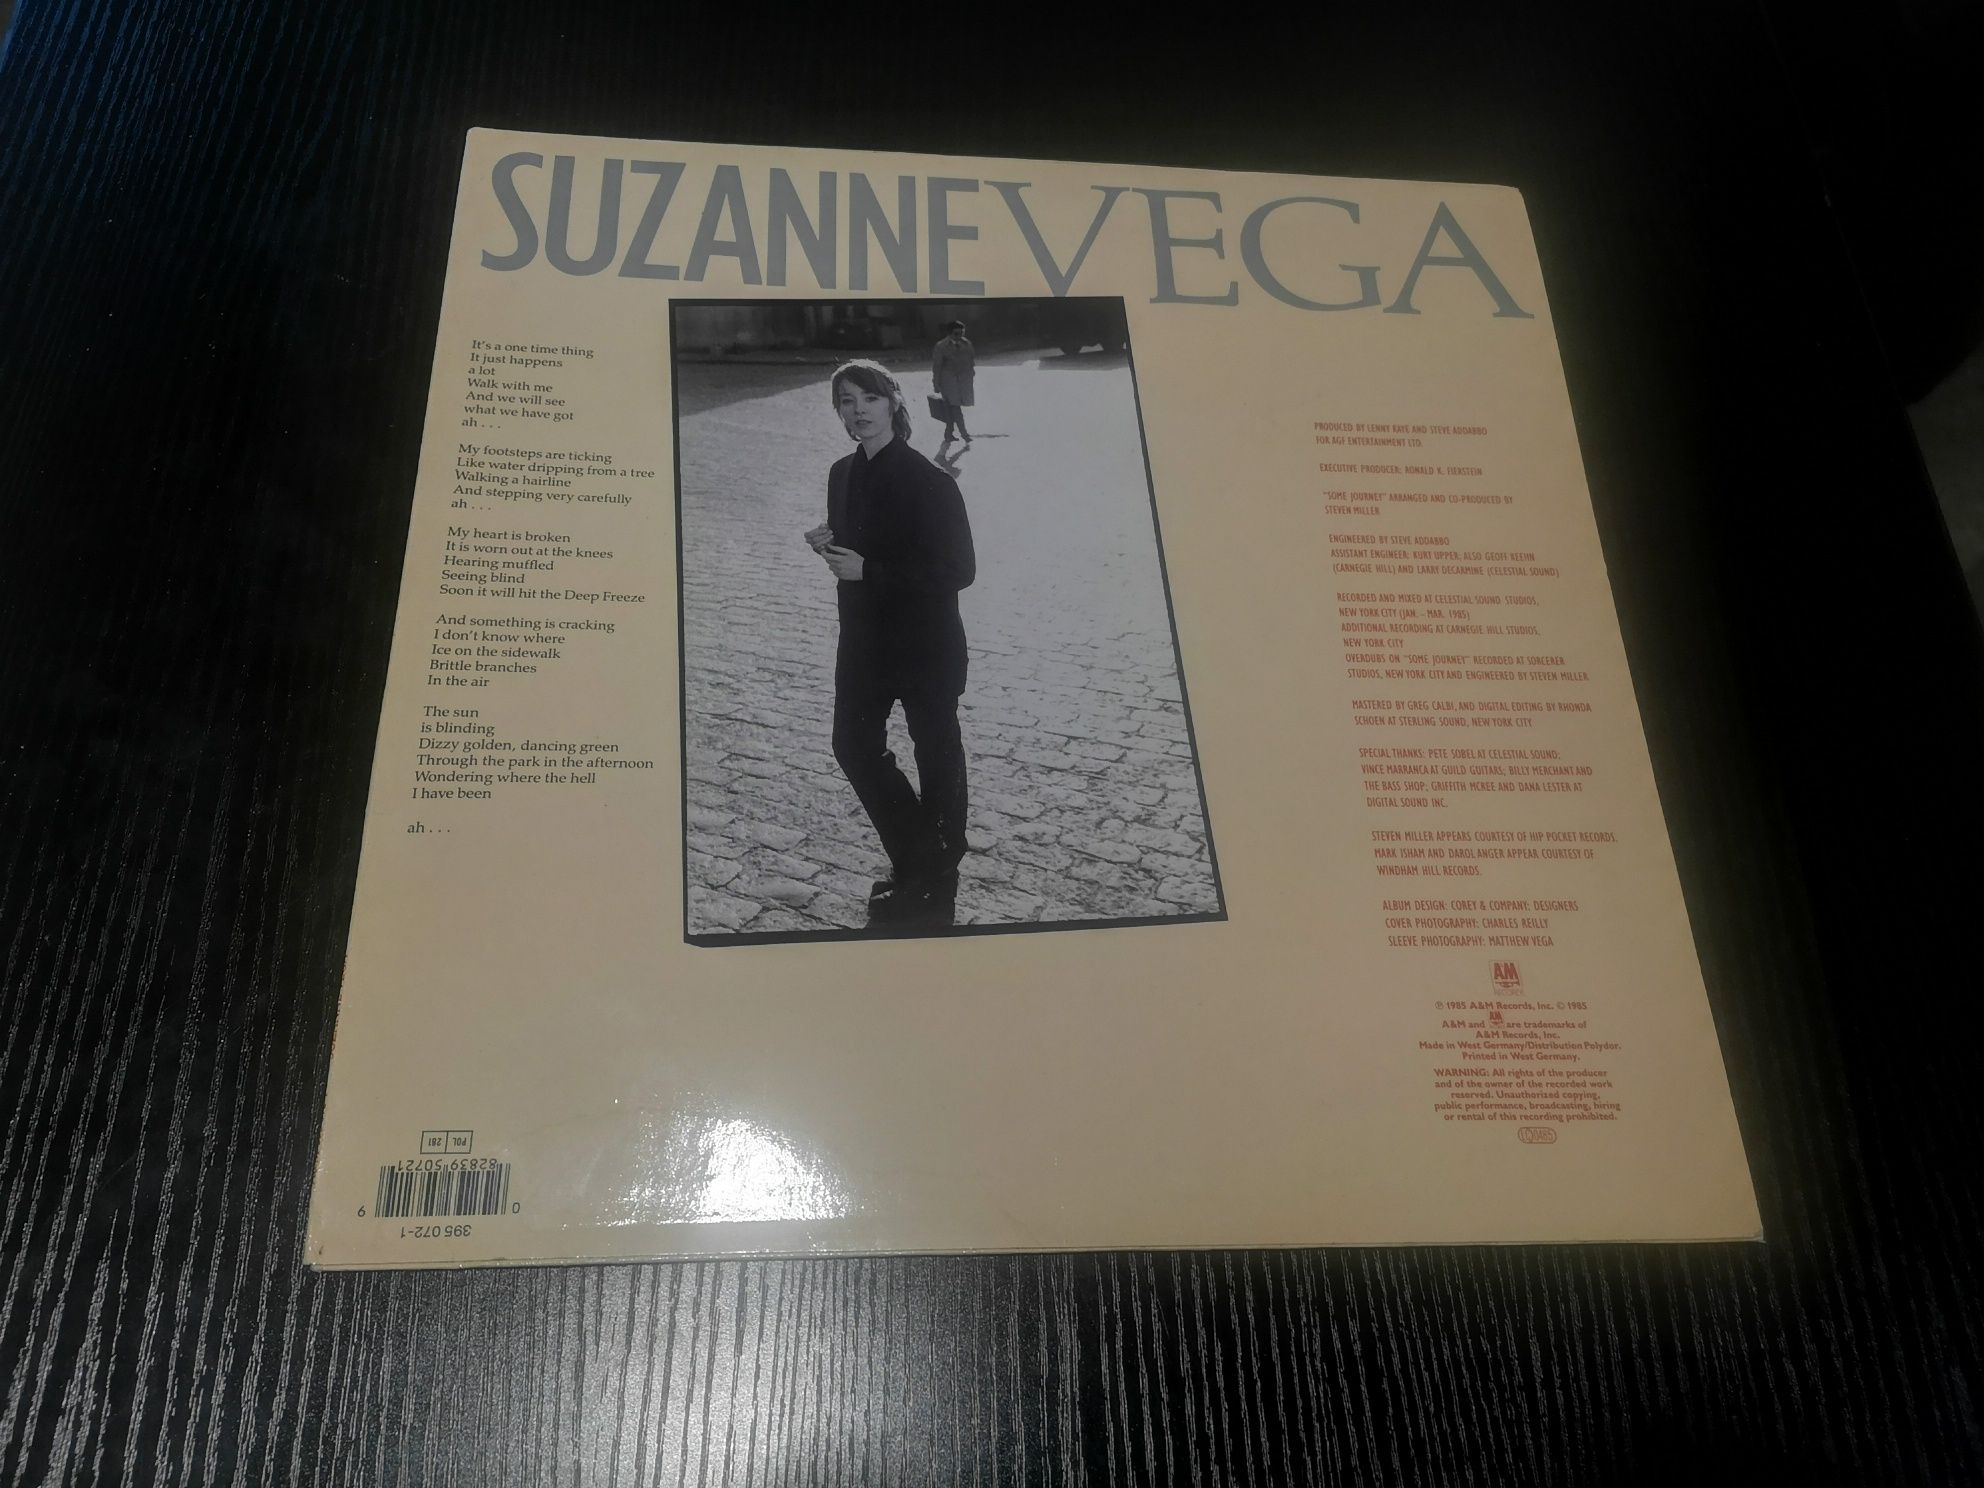 SUZANNE VEGA - Suzanne Vega - Lp - A&M